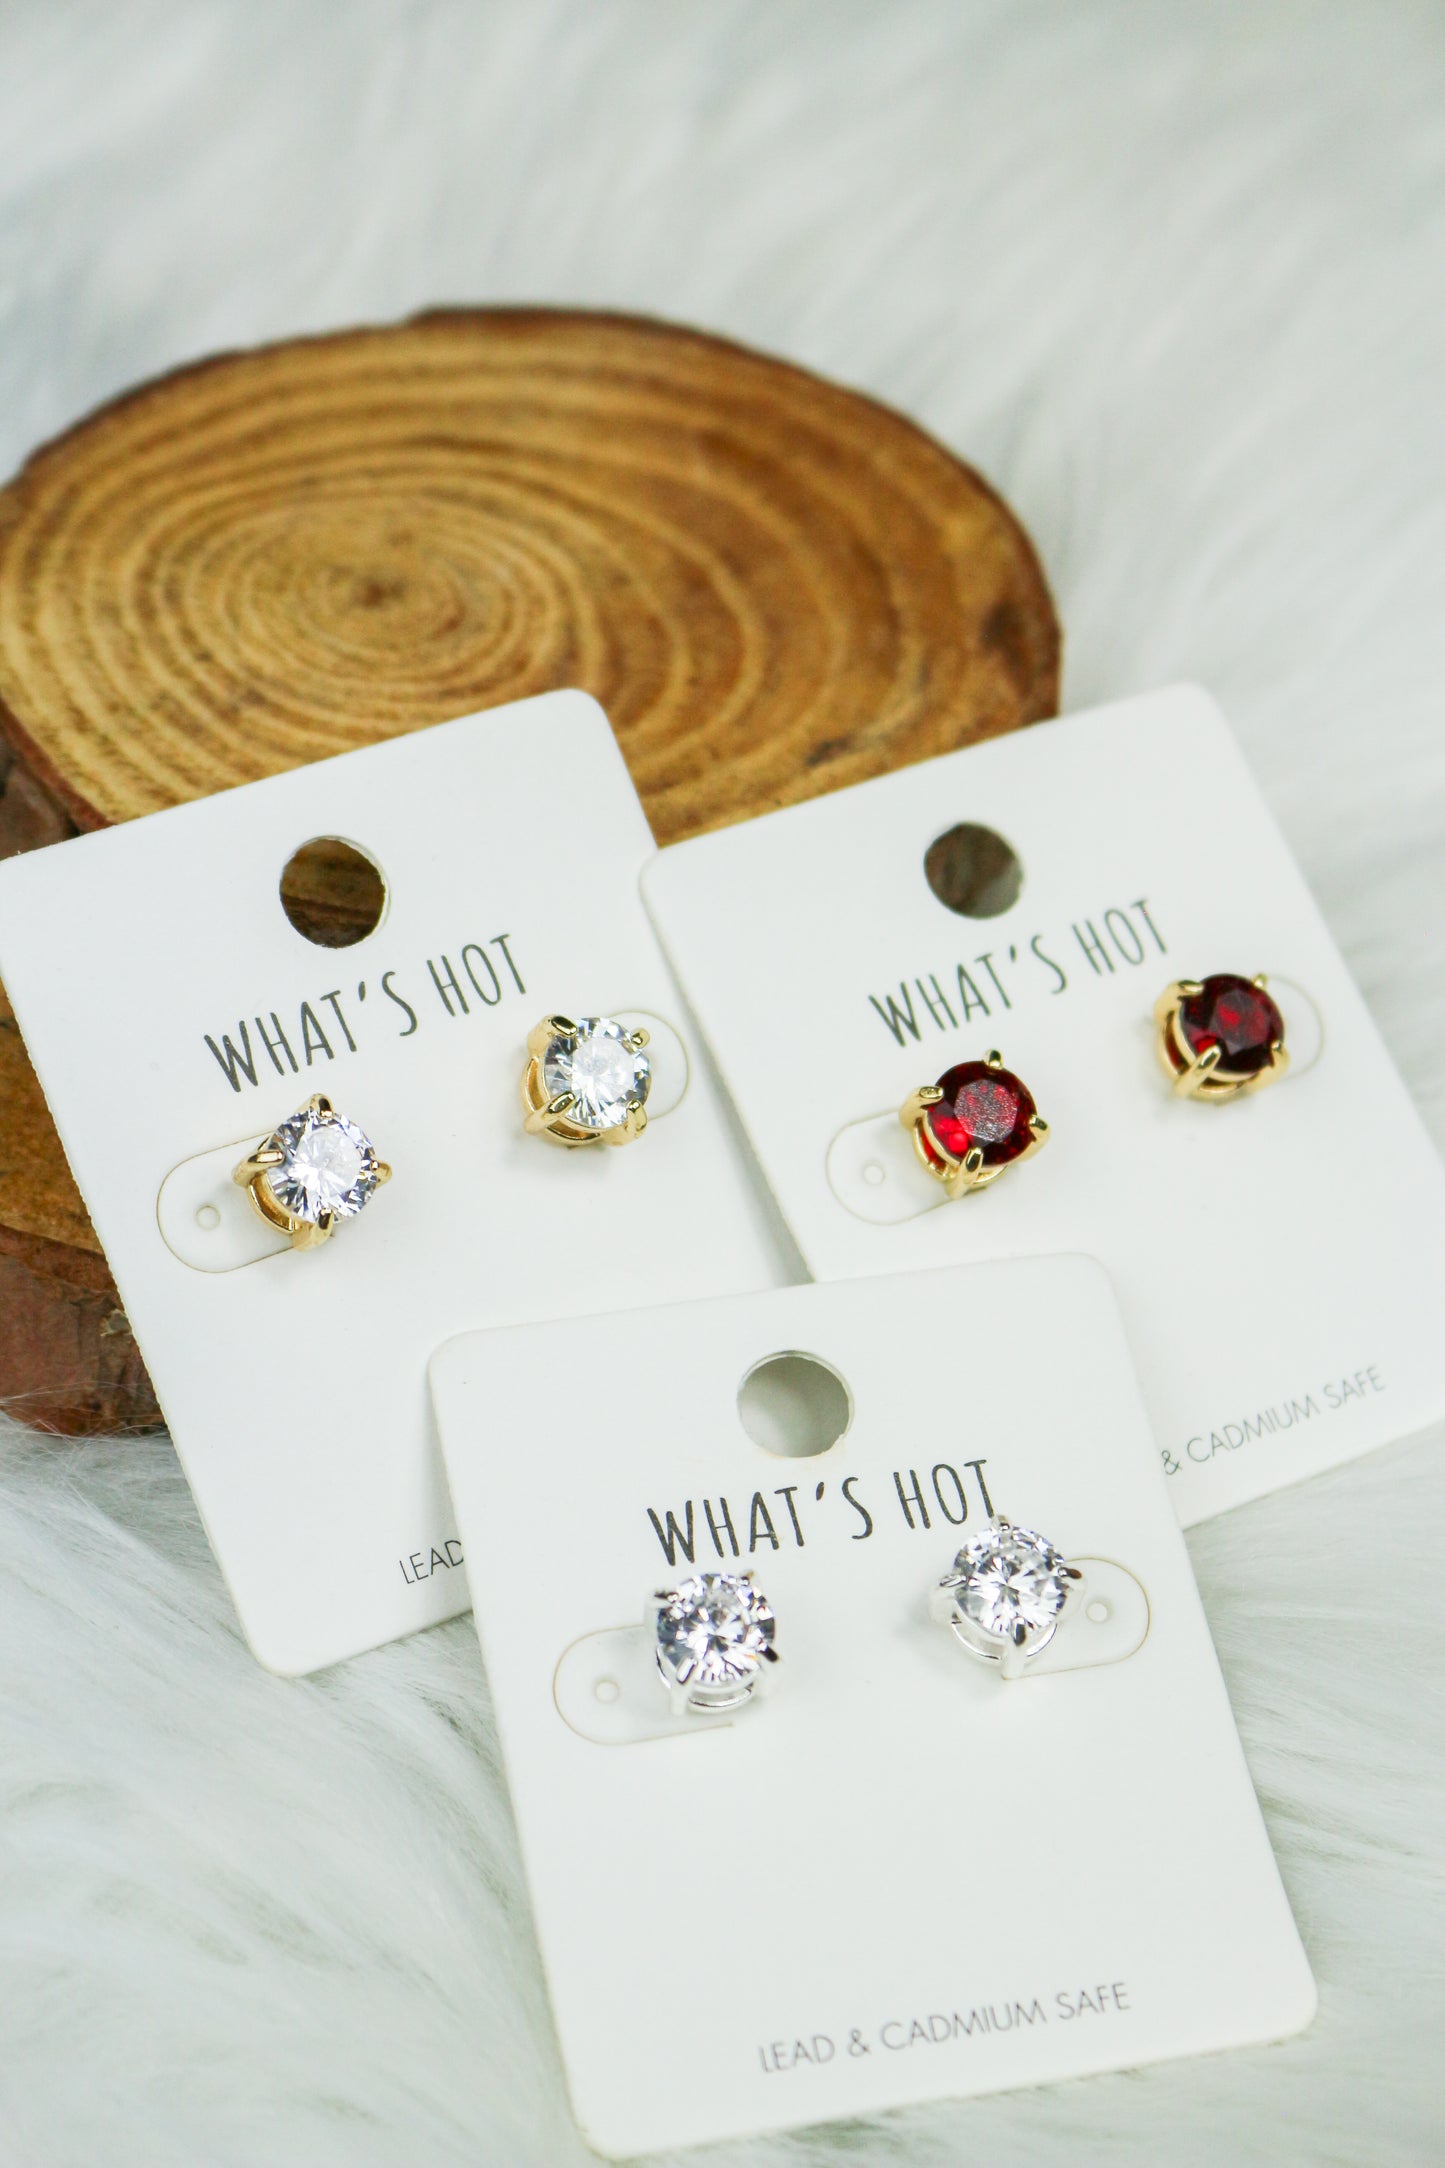 What's Hot Jewelry Gold Diamond Earrings